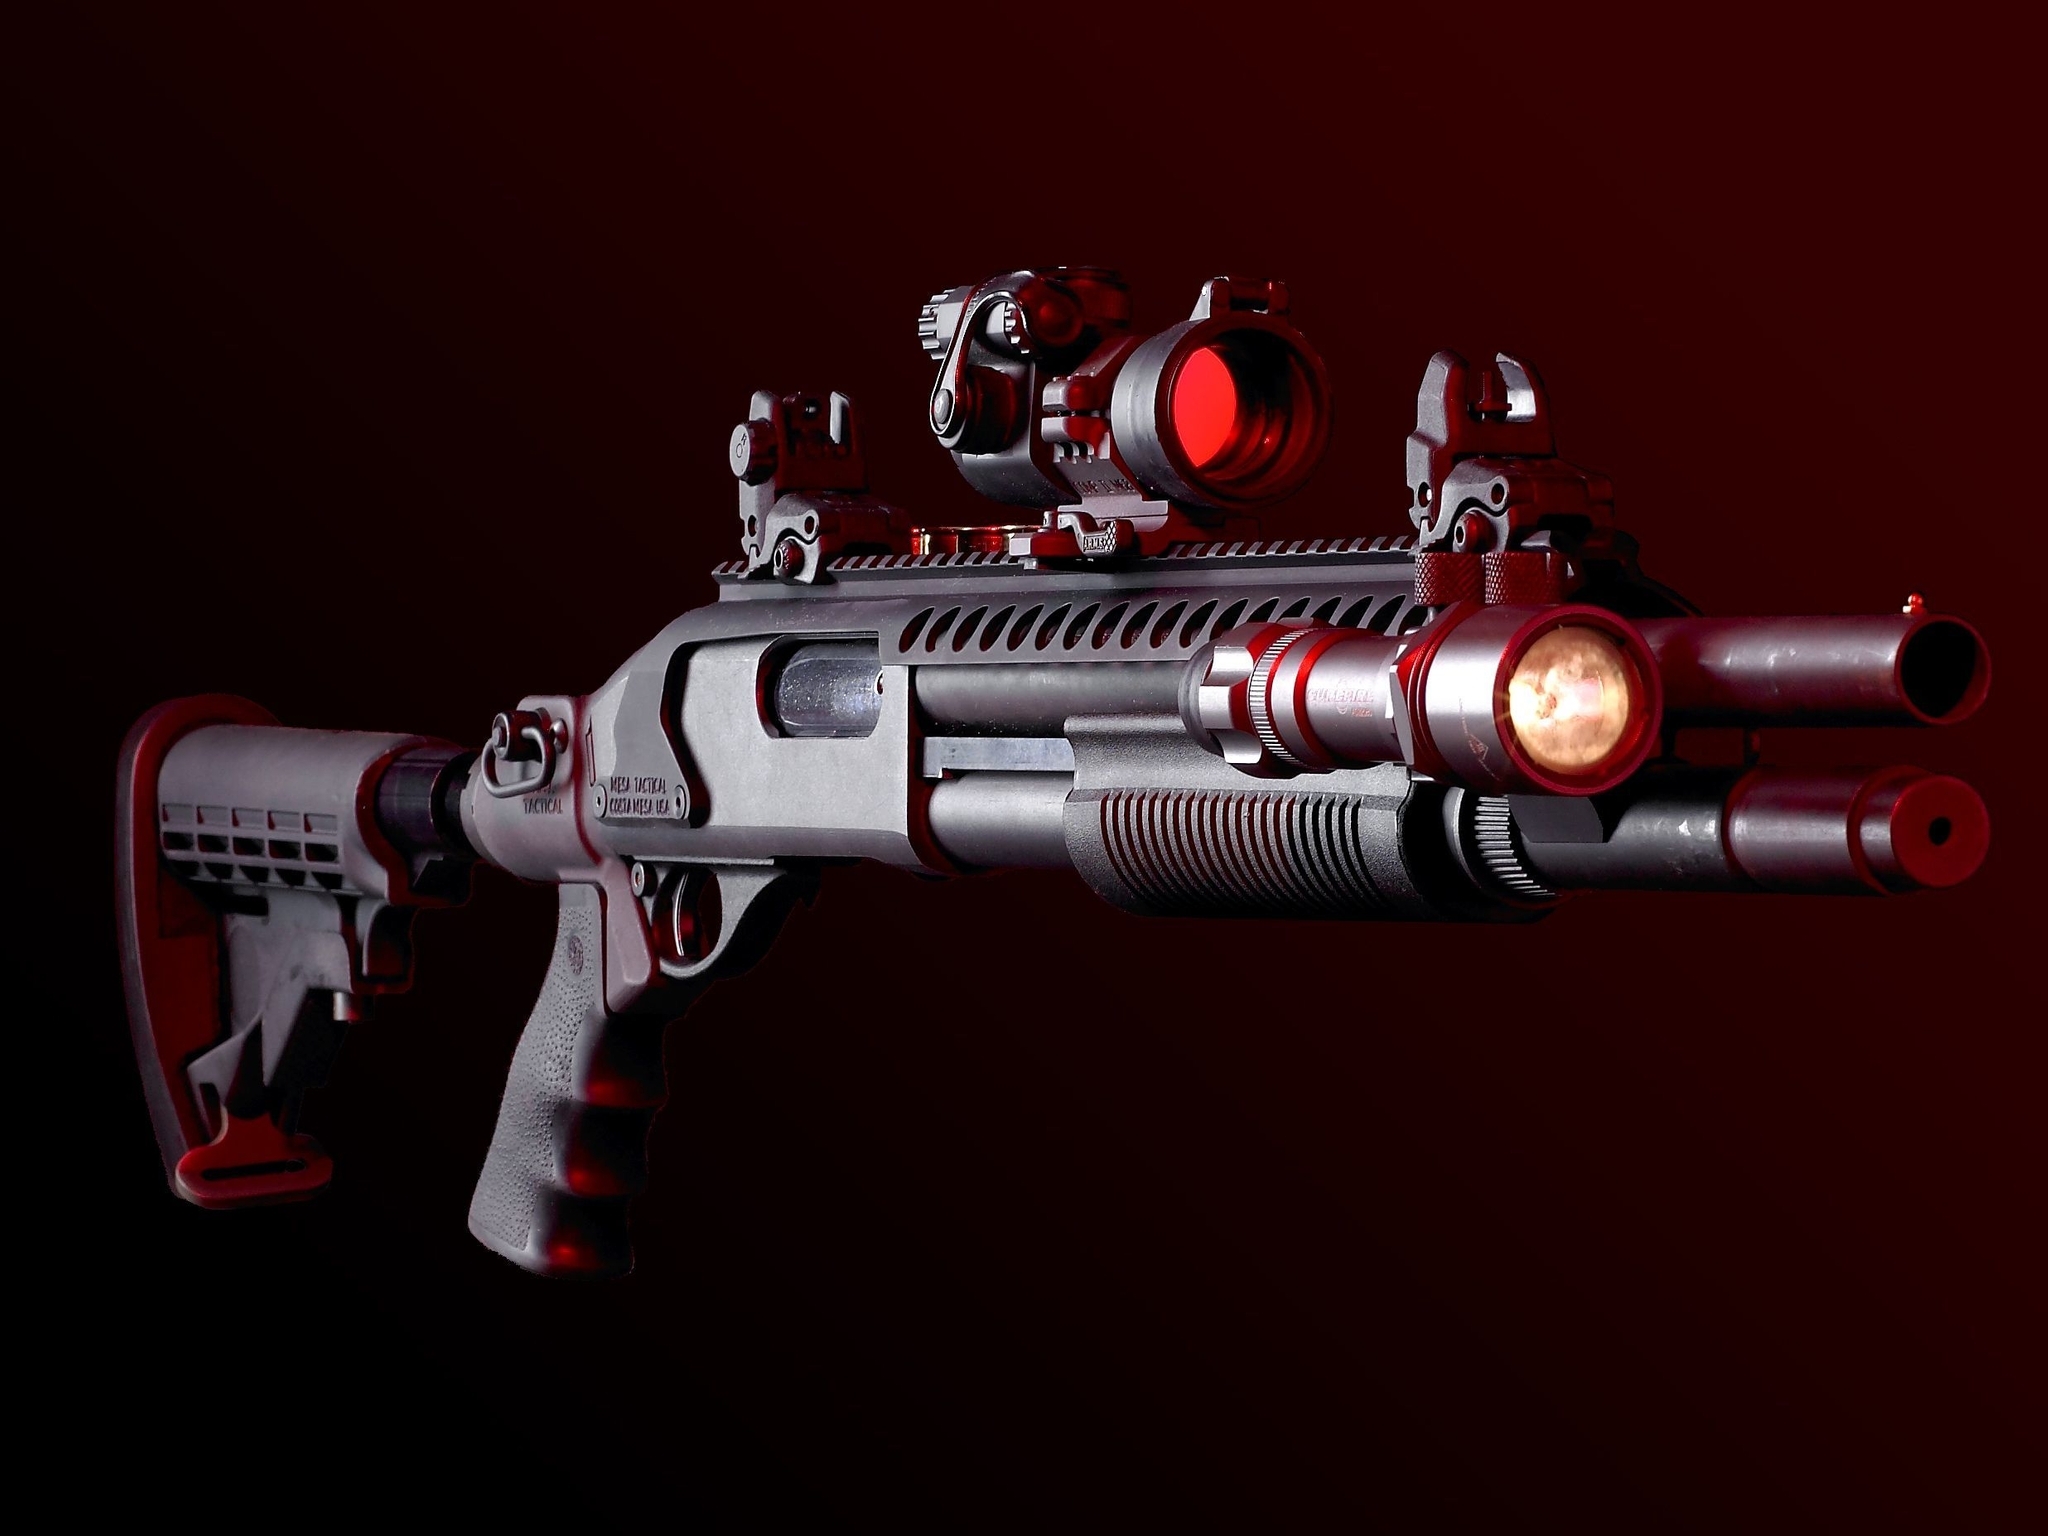 Image: Weapon, shotgun, sight, flashlight